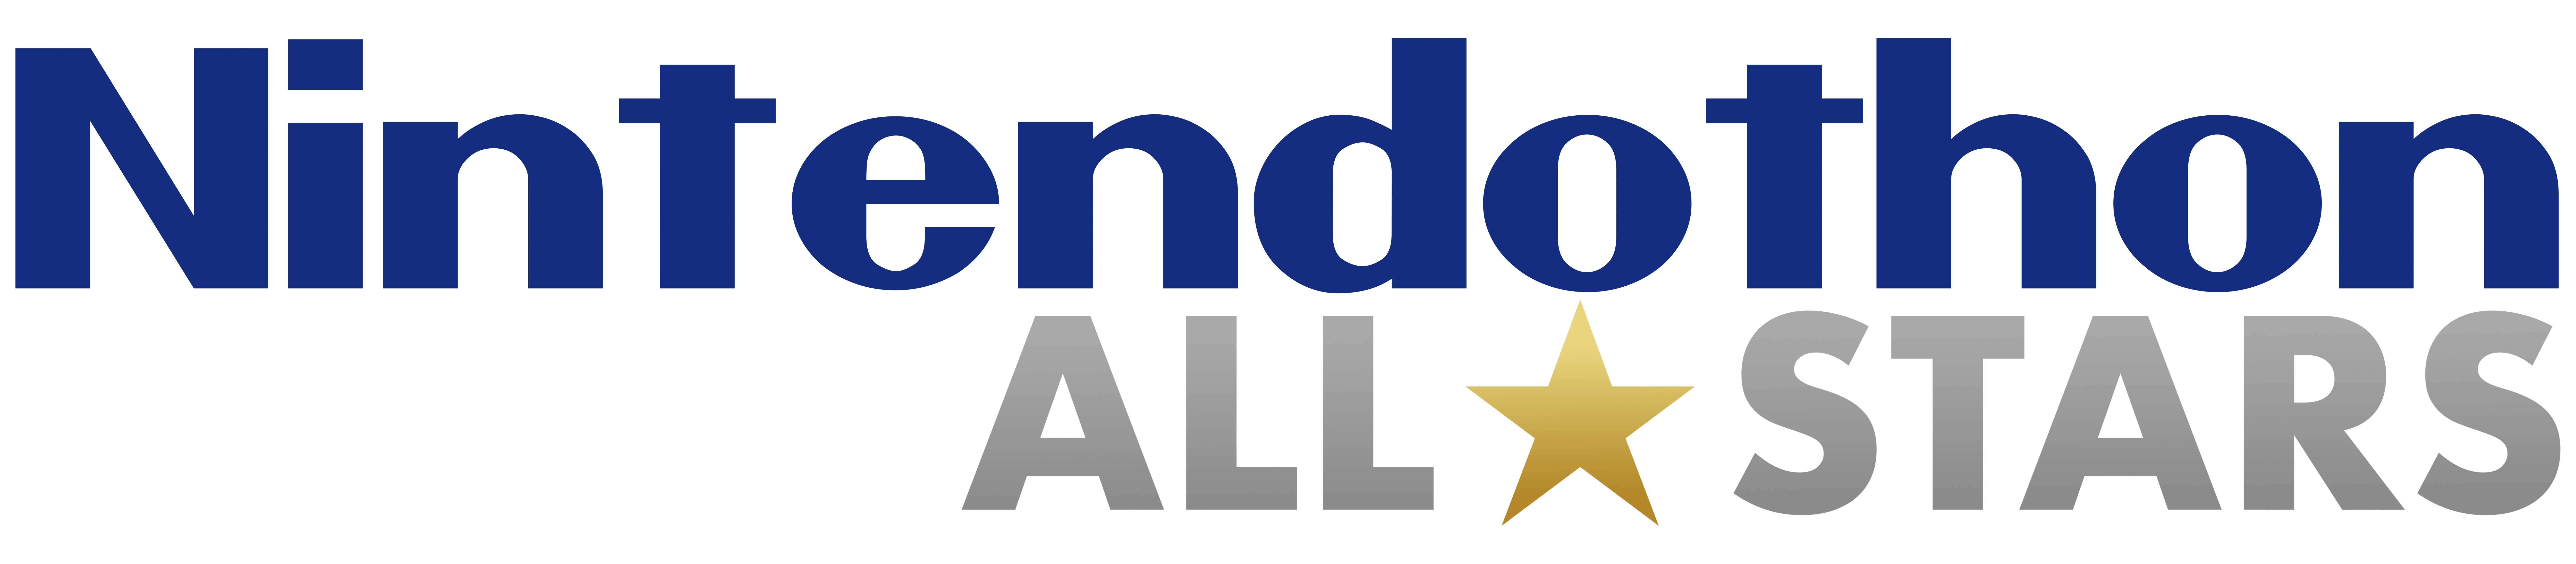 Nintendothon All Stars – A Stellar Event!